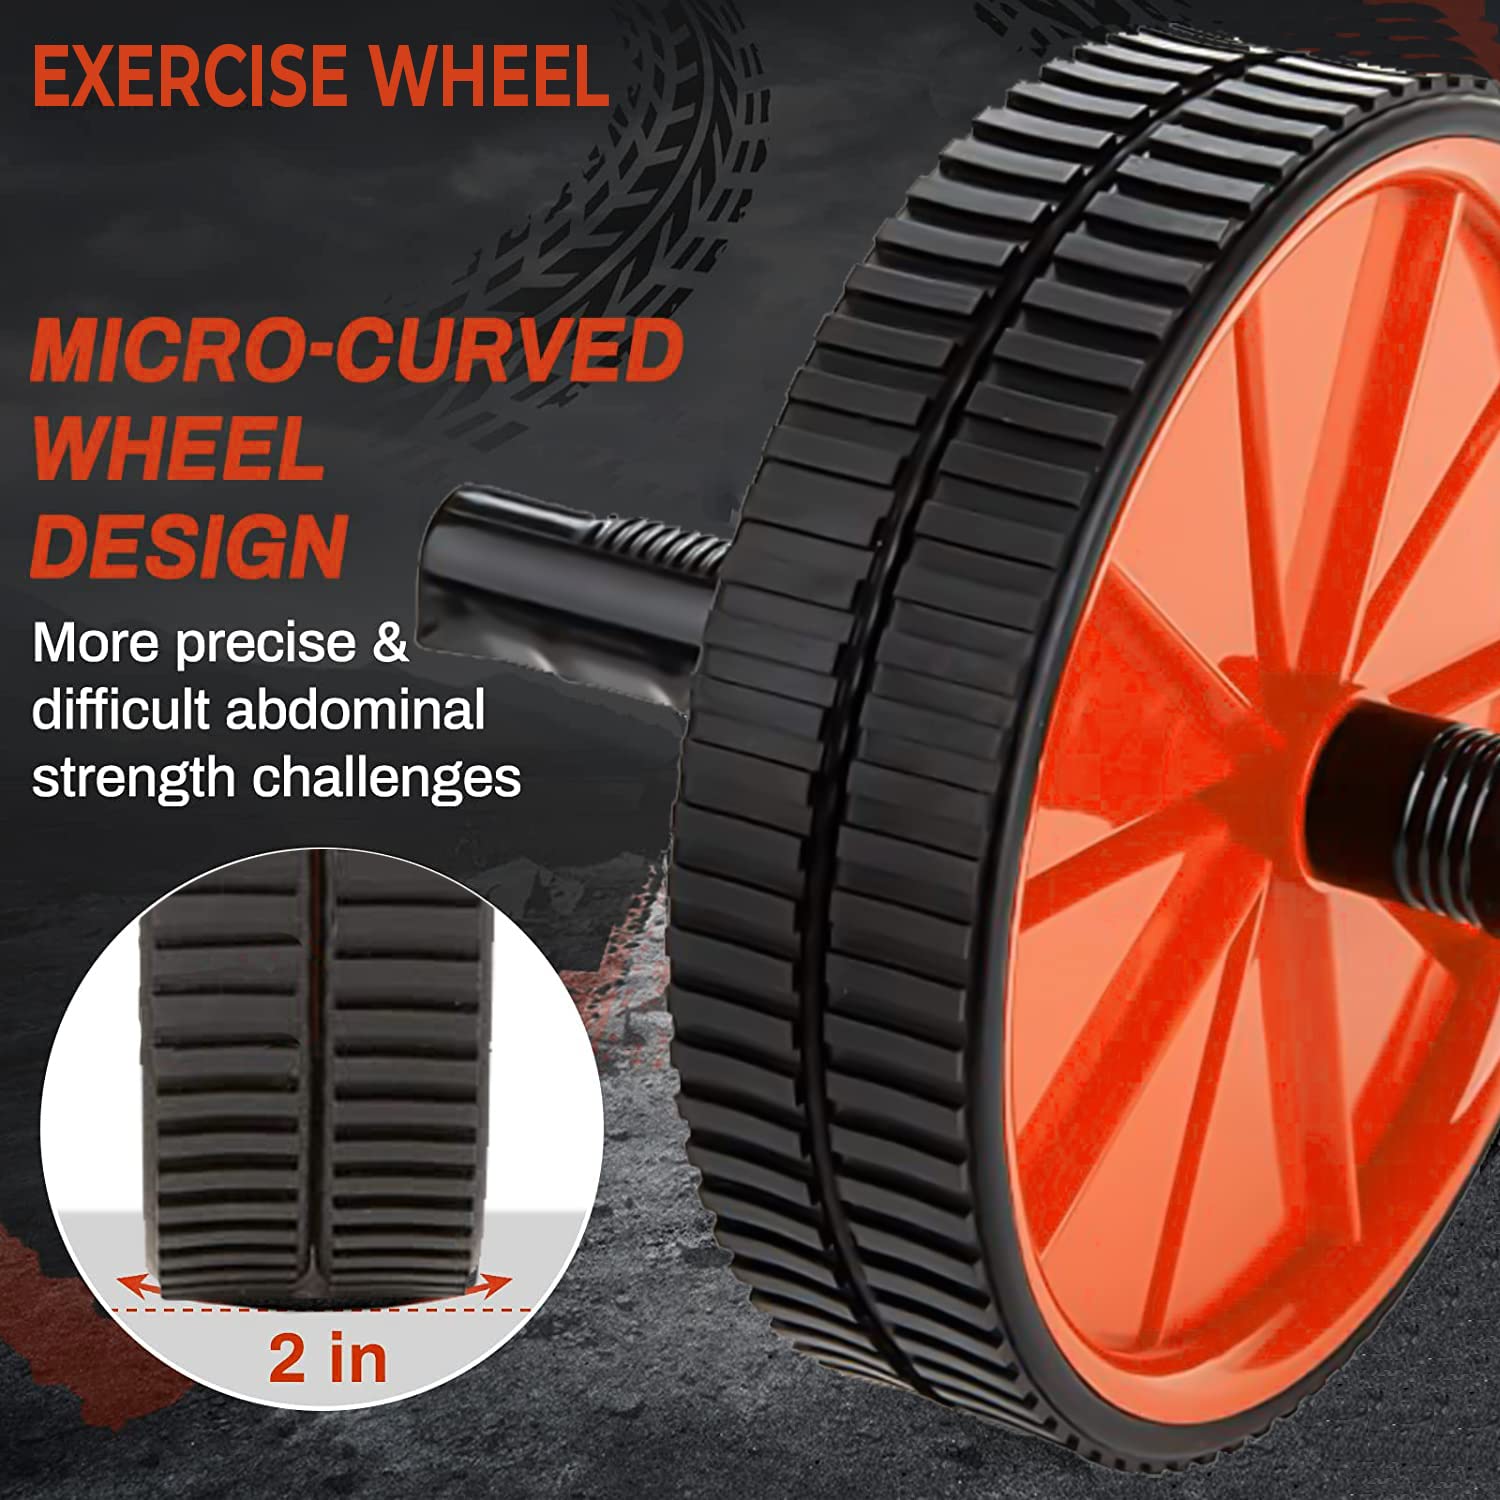 Strauss Premium Exercise wheel Ab Roller with PVC Handles, (Orange)